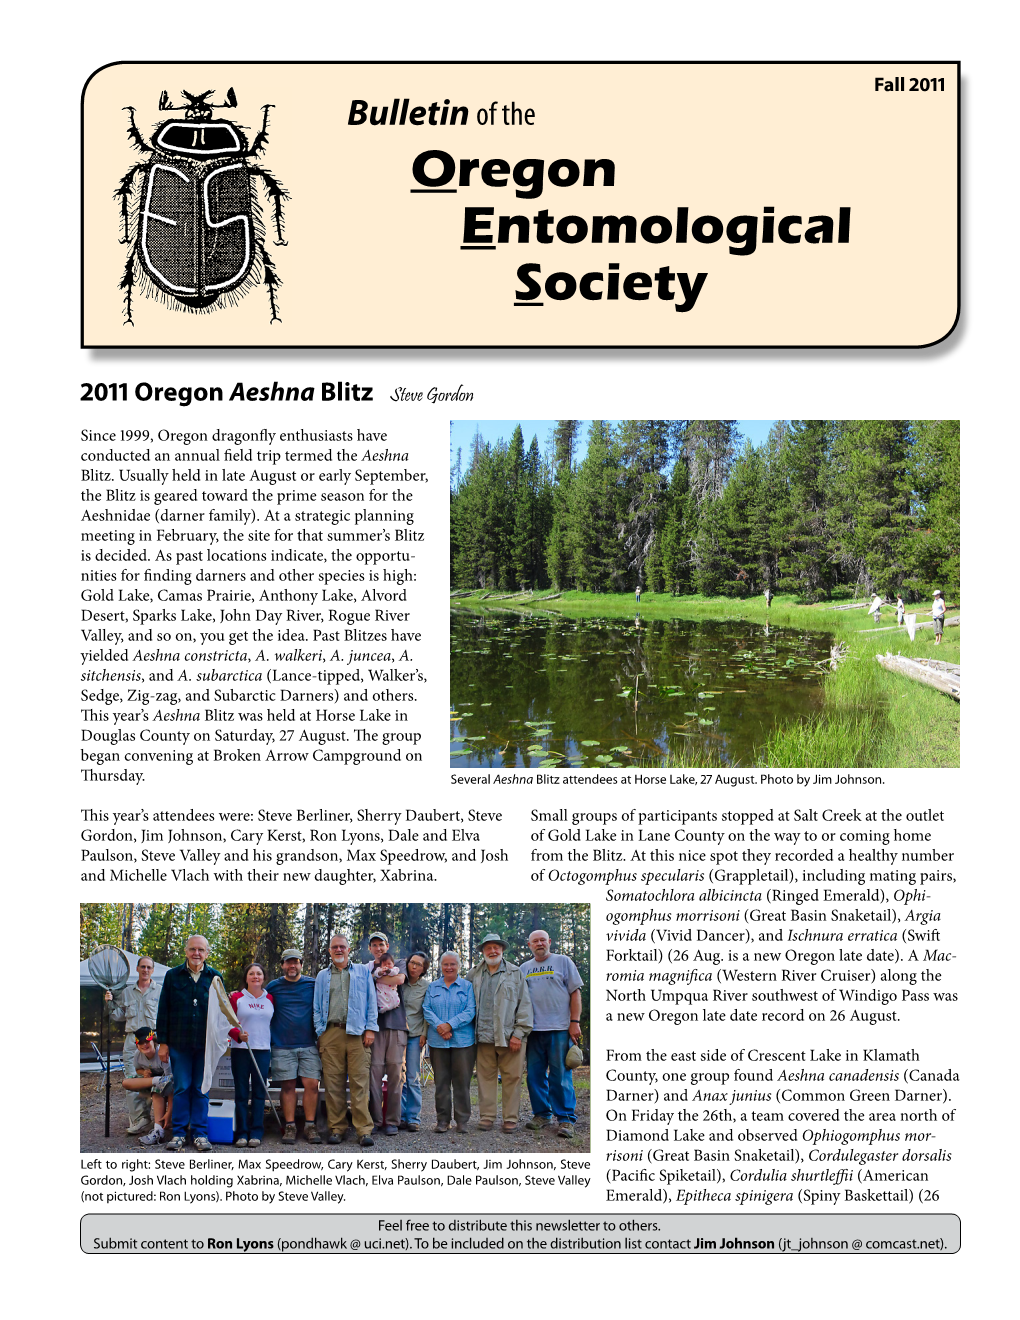 Fall 2011 Bulletin of the Oregon Entomological Society